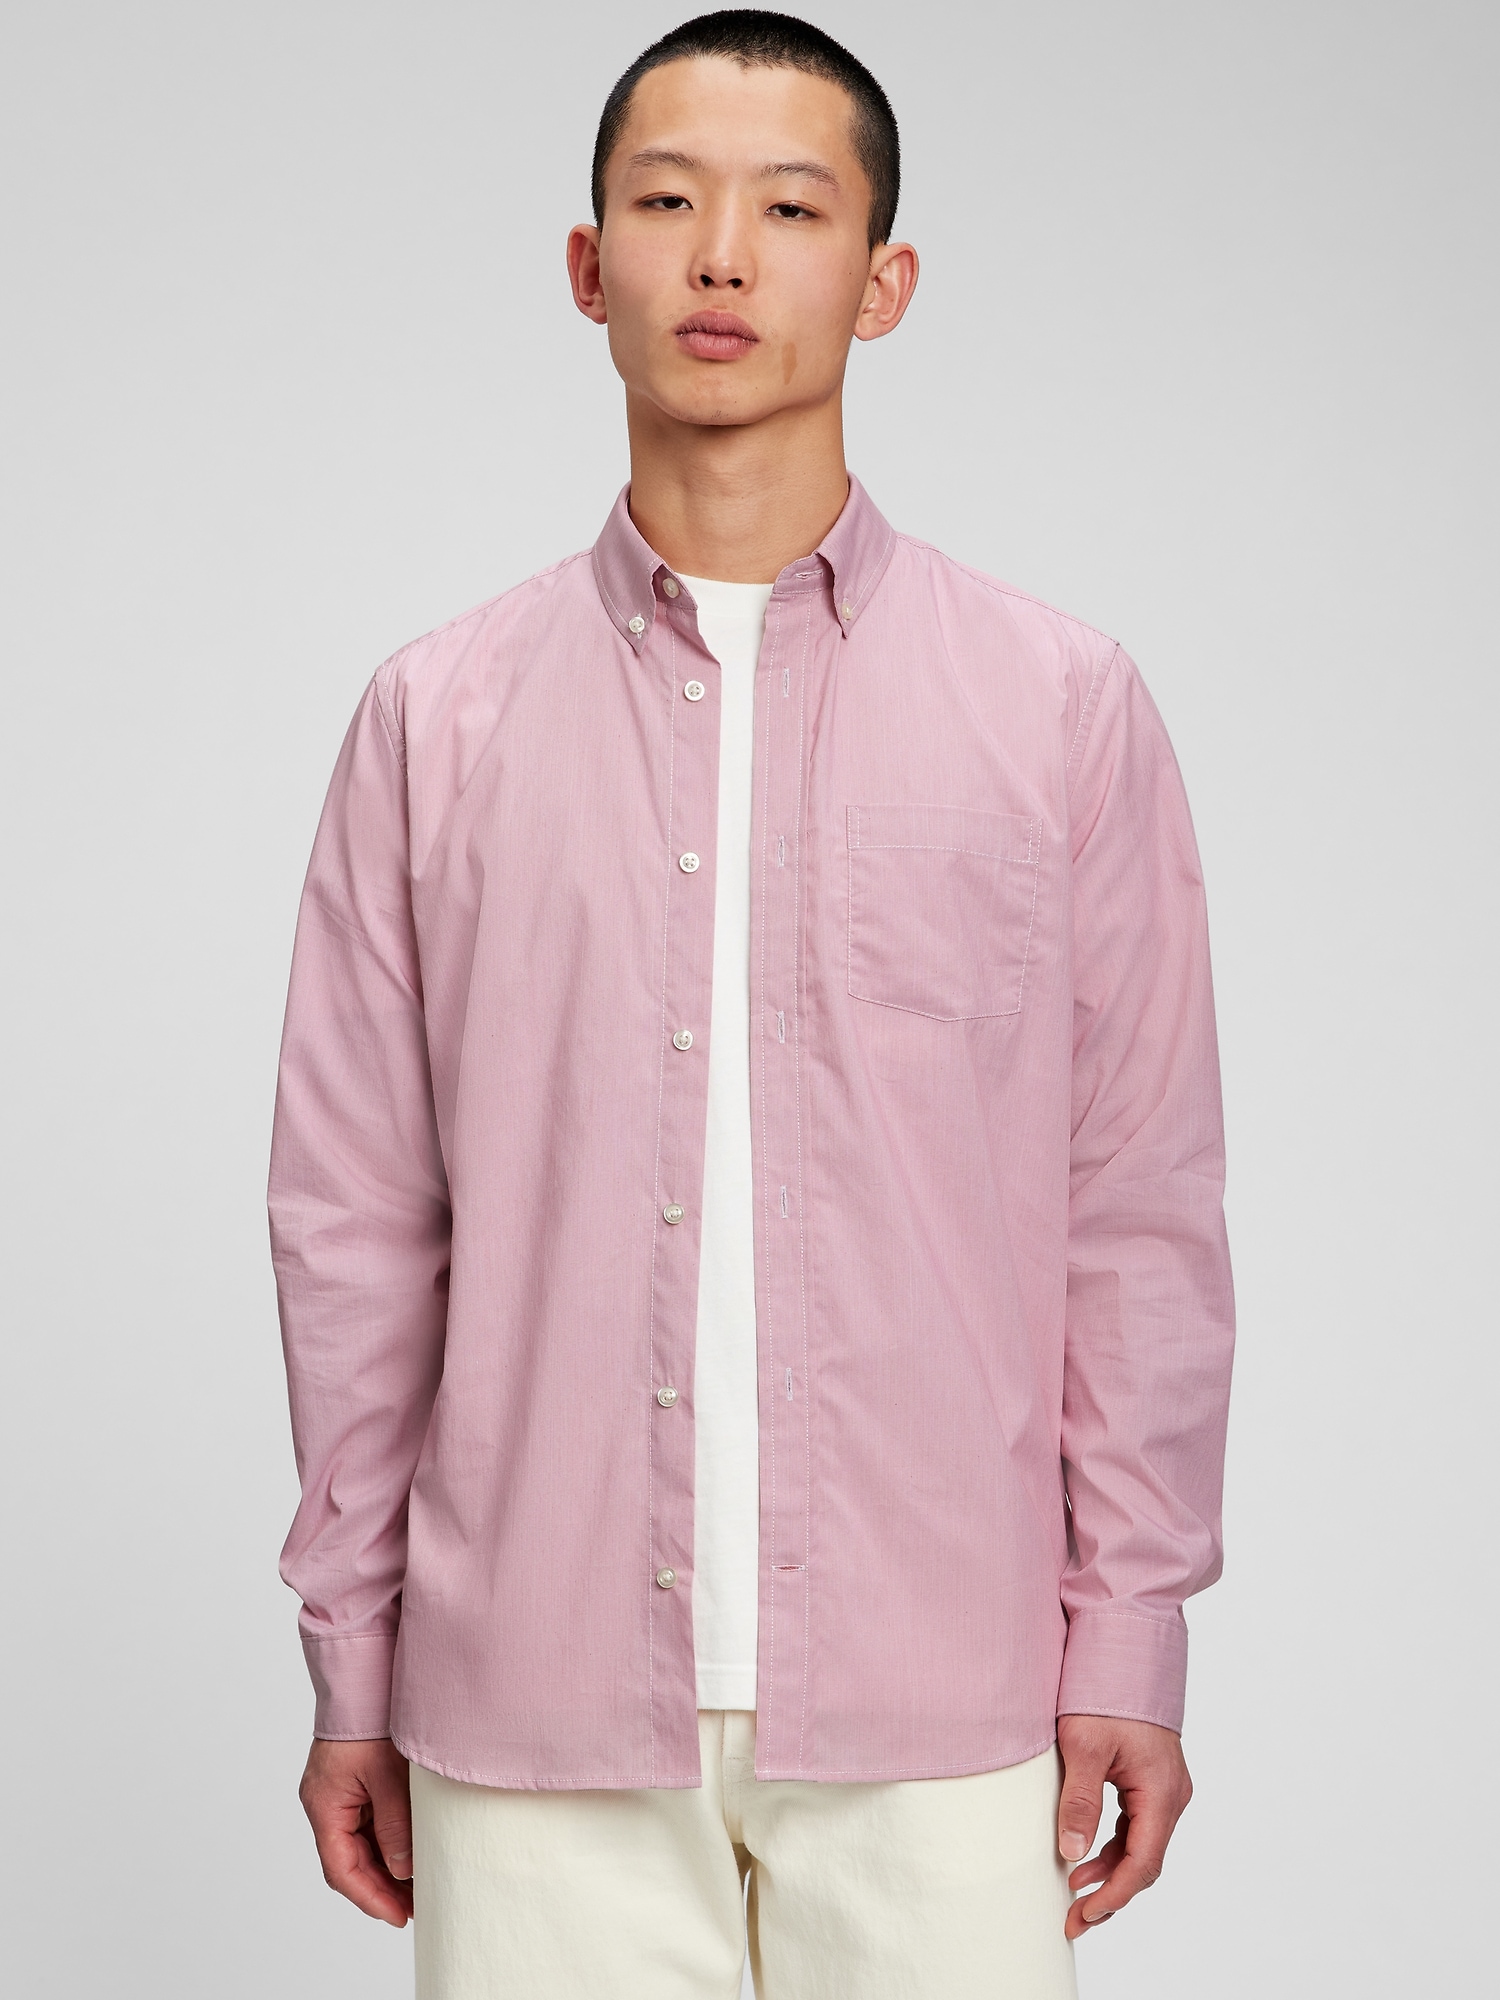 Gap All-Day Poplin Shirt in Standard Fit pink. 1